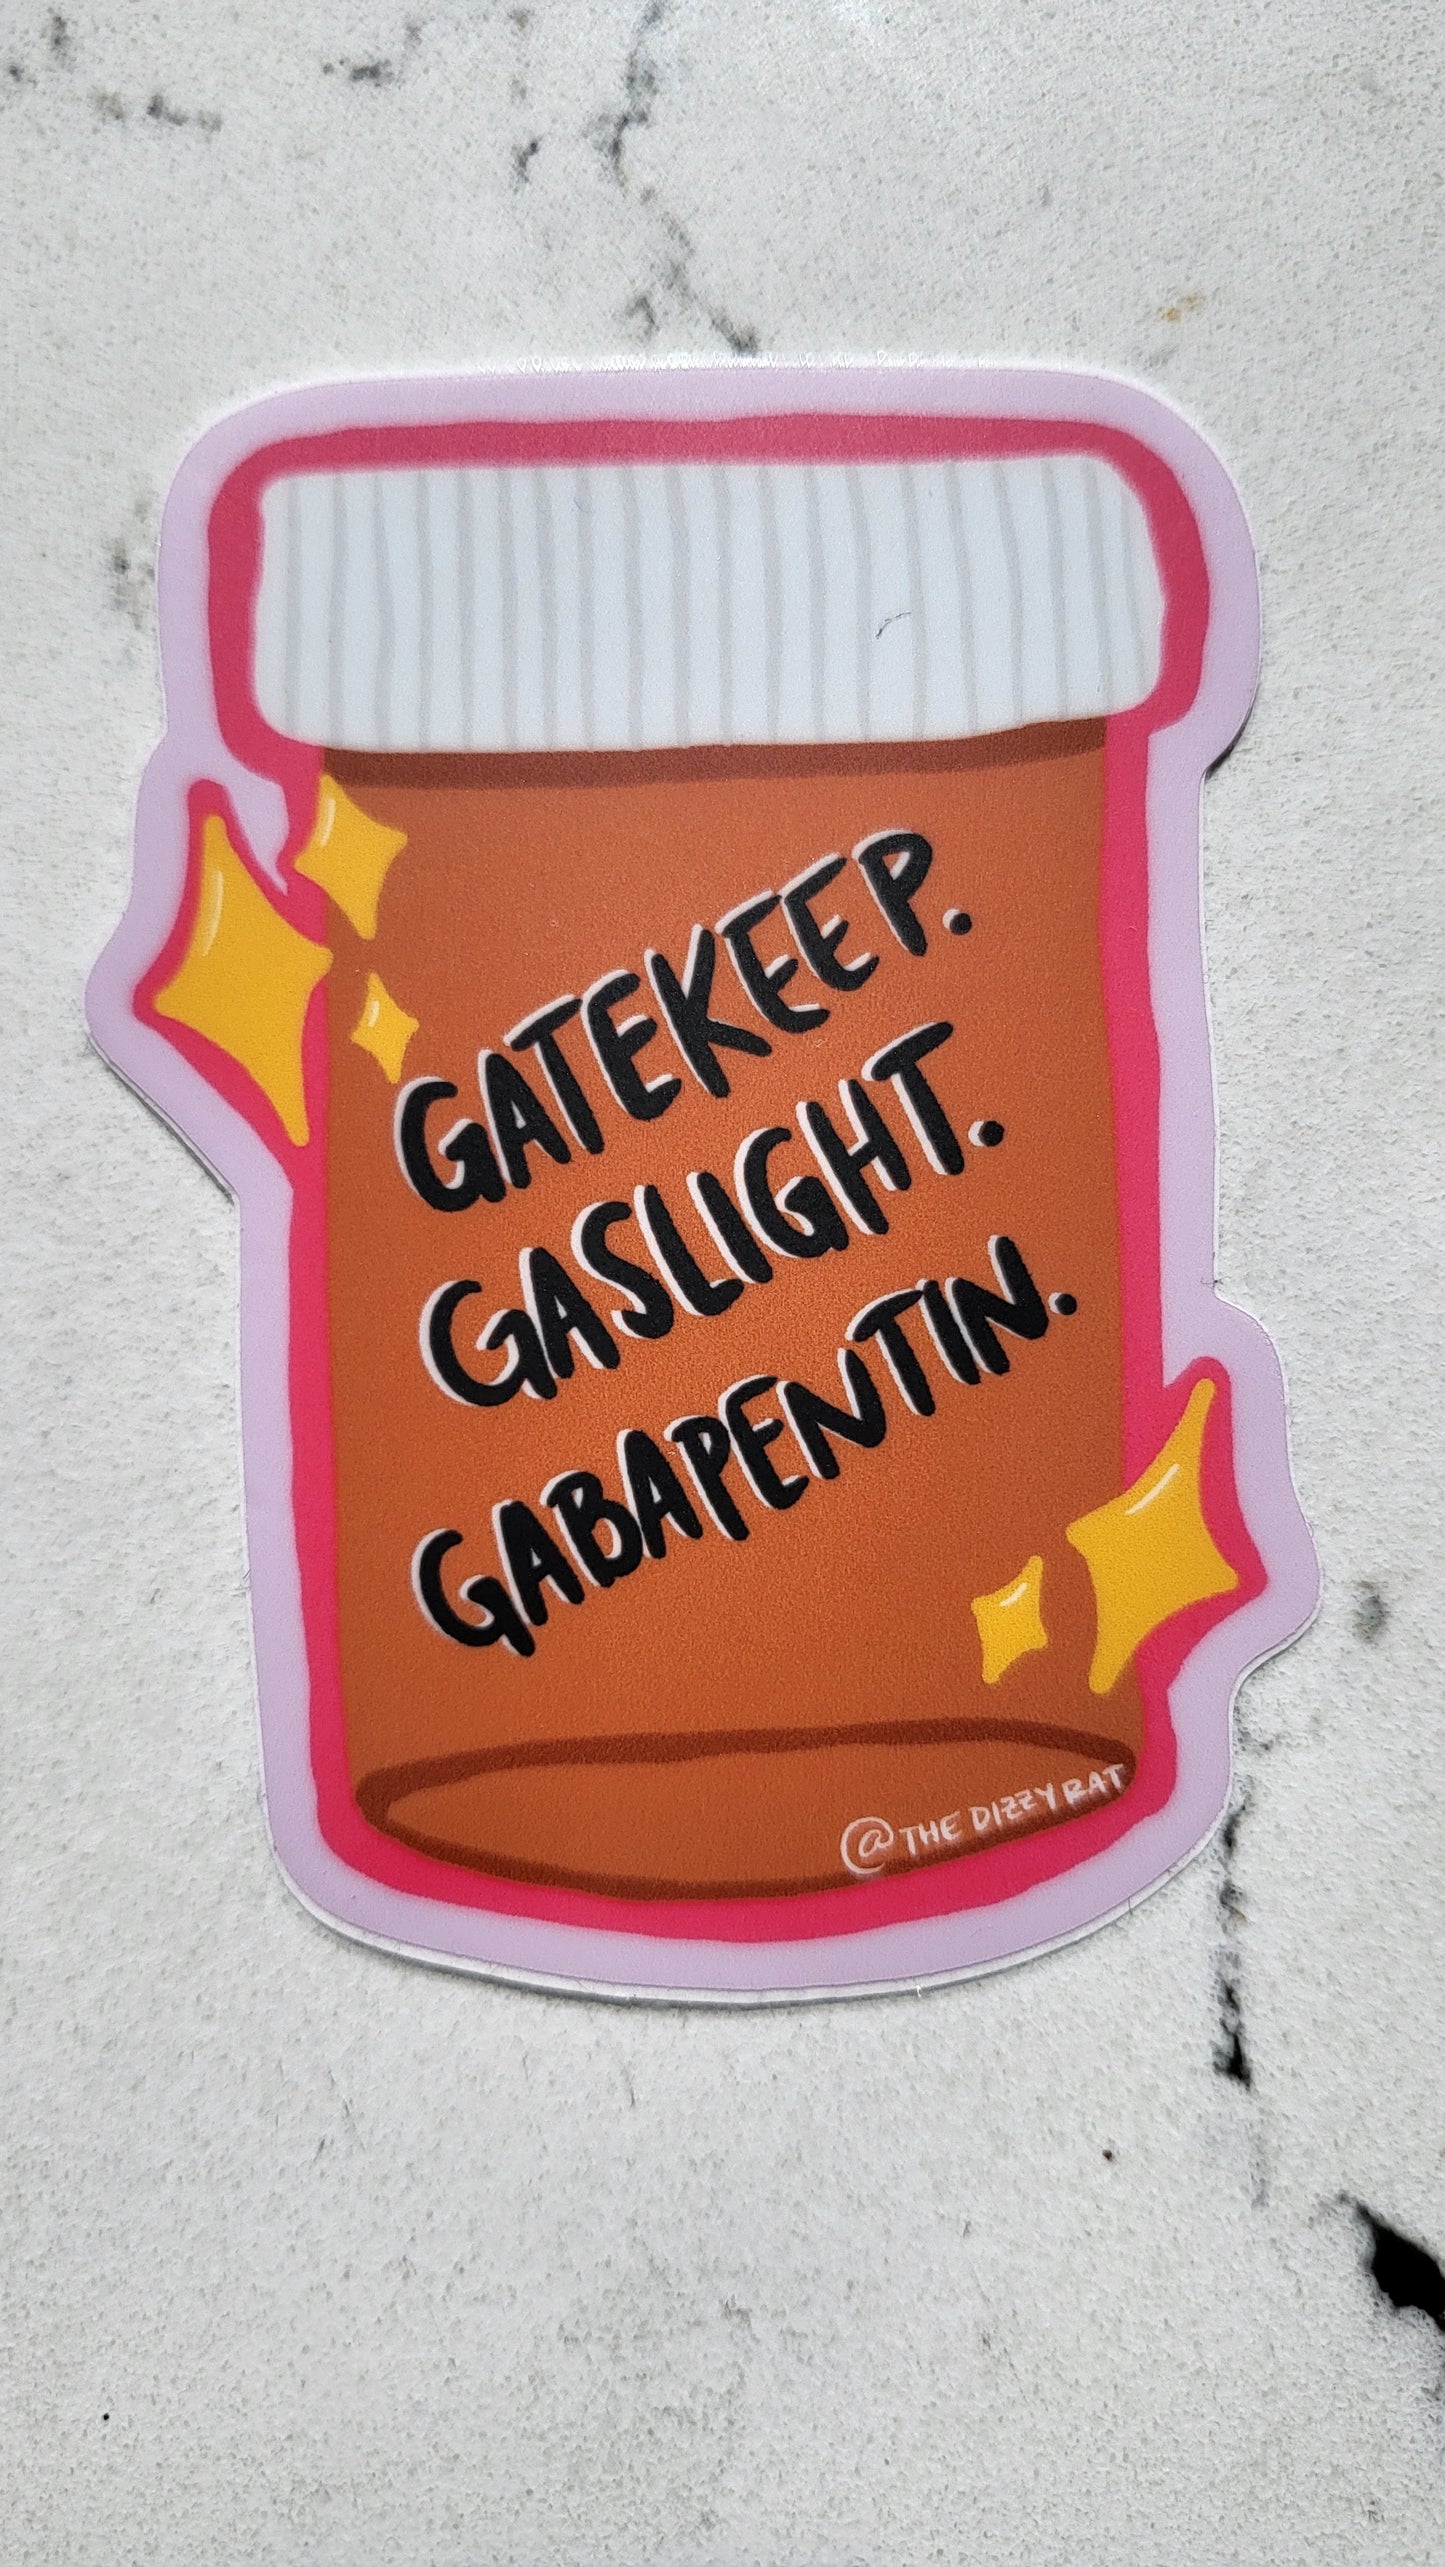 Gatekeep Gaslight Gabapentin